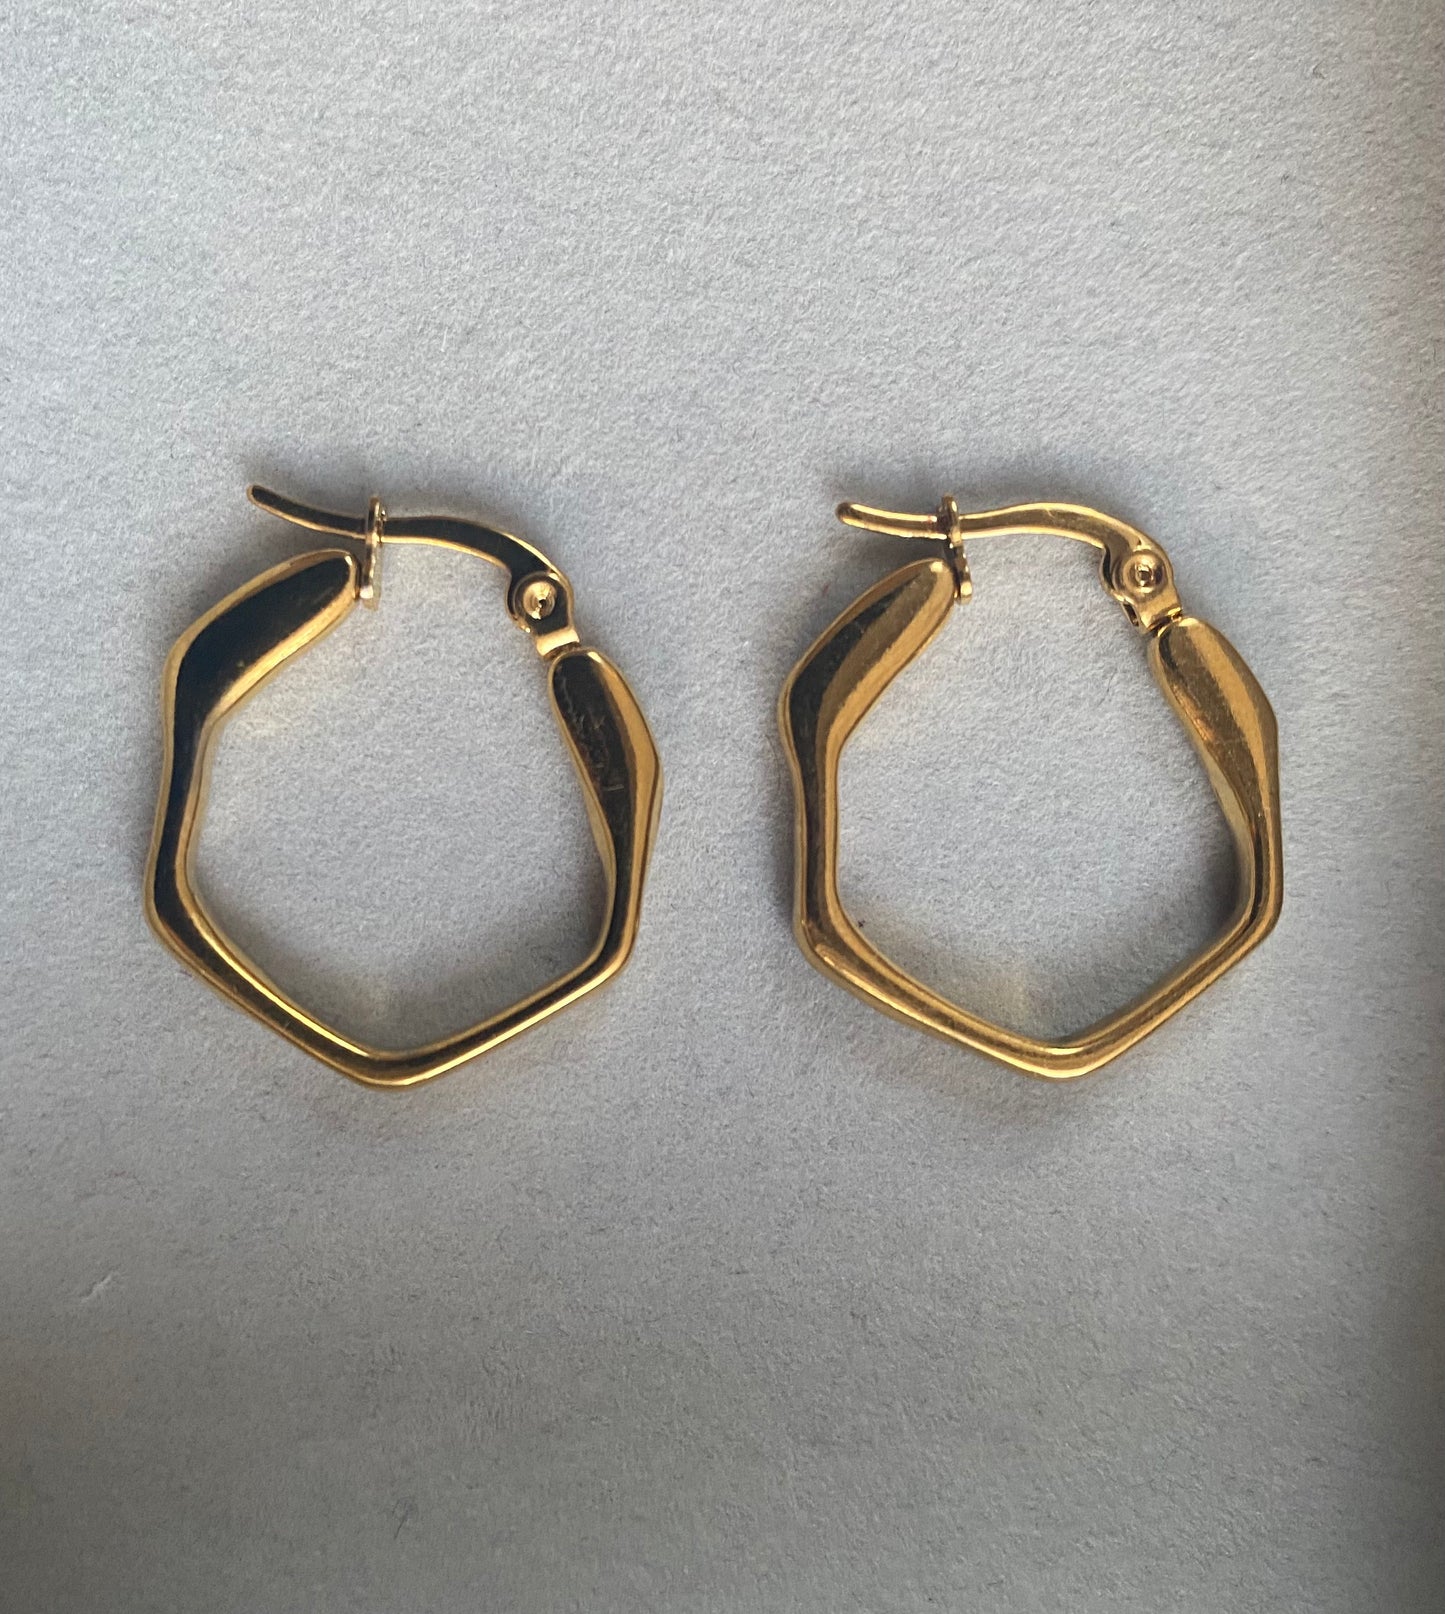 Classic gold earrings